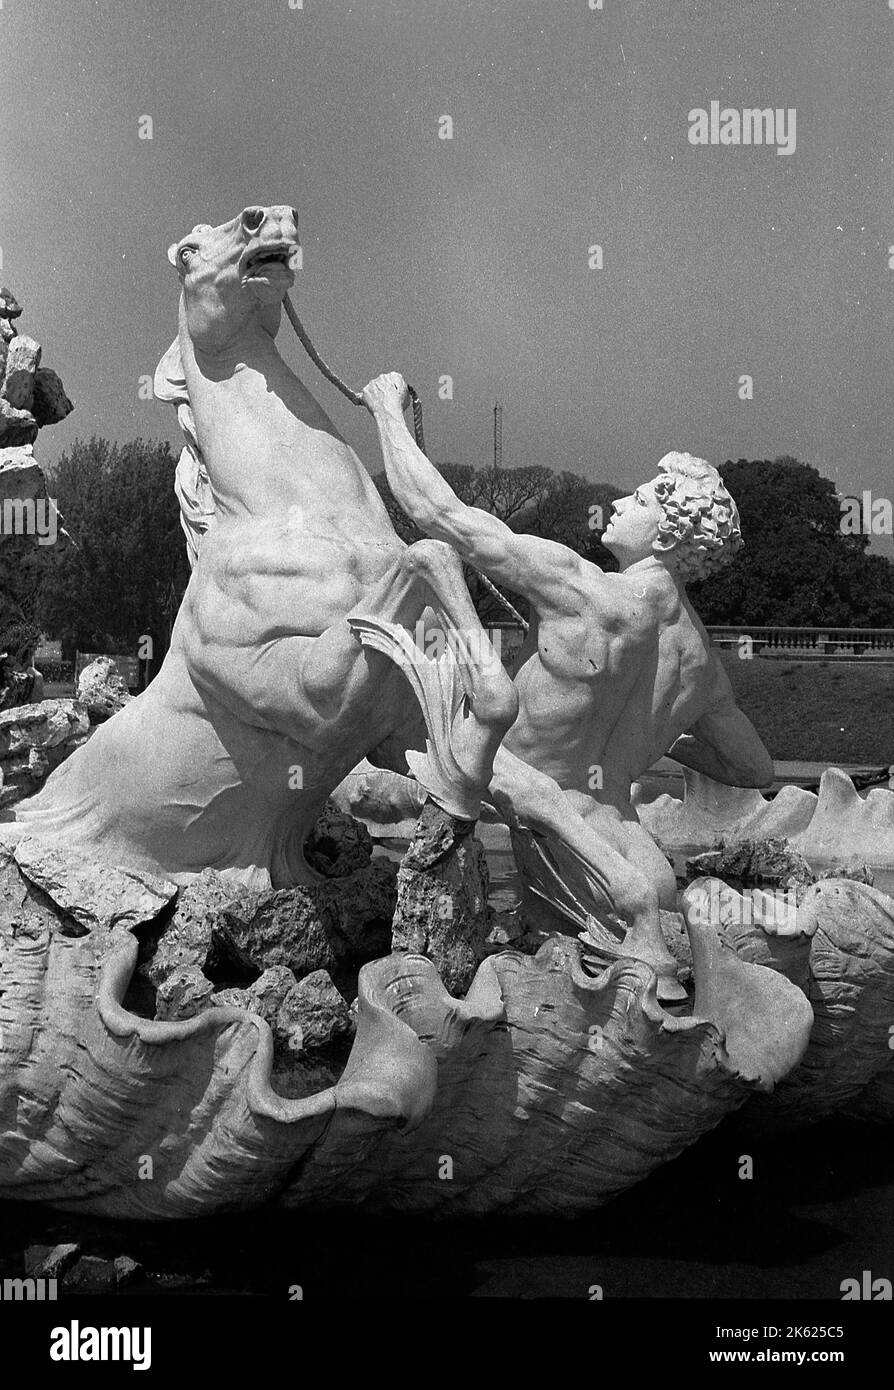 Las Nereidas fountain by Lola Mora, at the Costanera Sur, Buenos Aires, Argentina Stock Photo